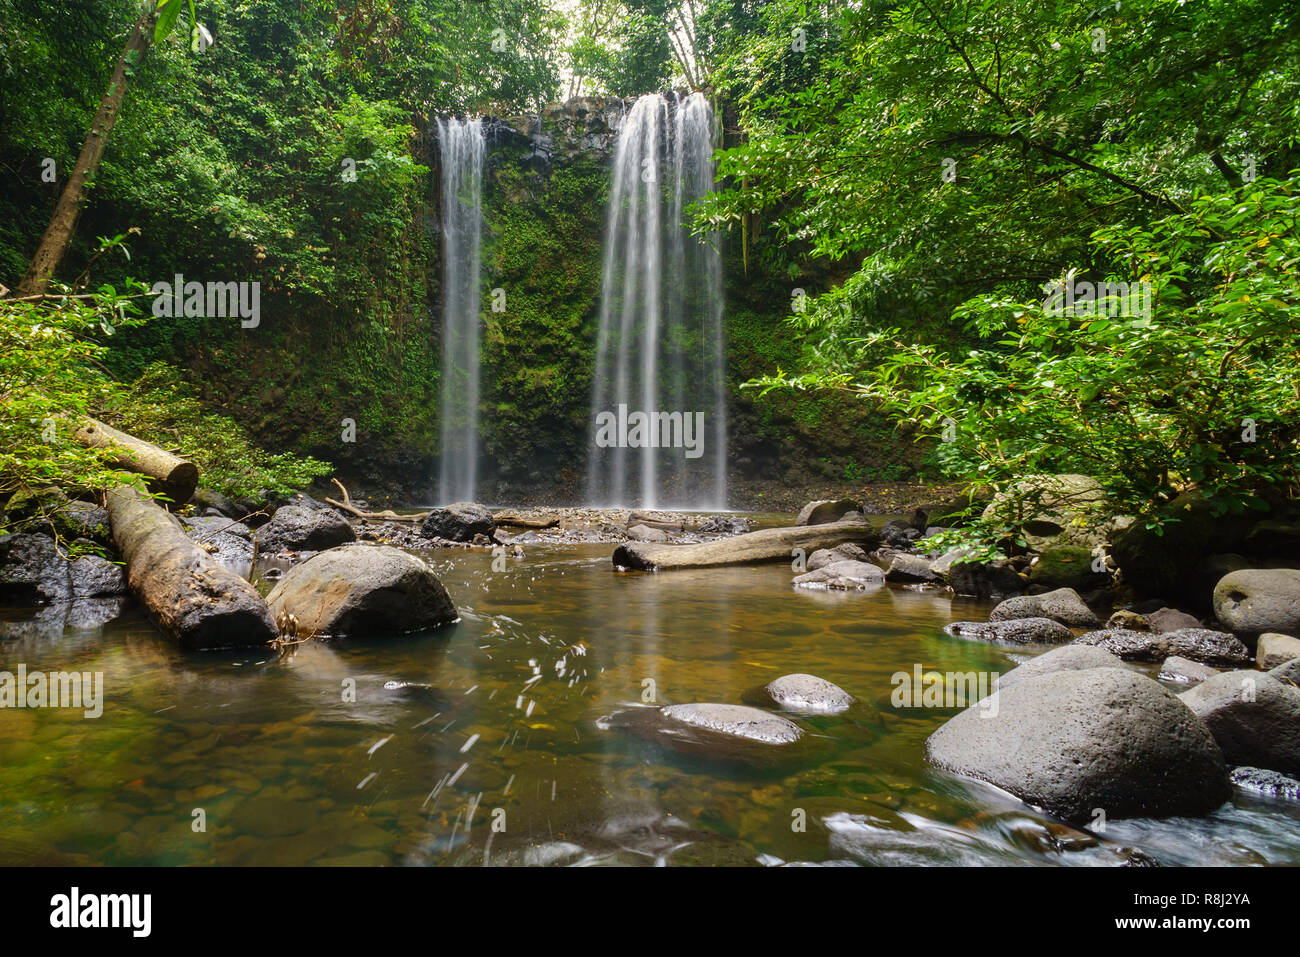 Madai waterfall in the tropical rainforest jungle of Borneo Sabah Malaysia. Stock Photo